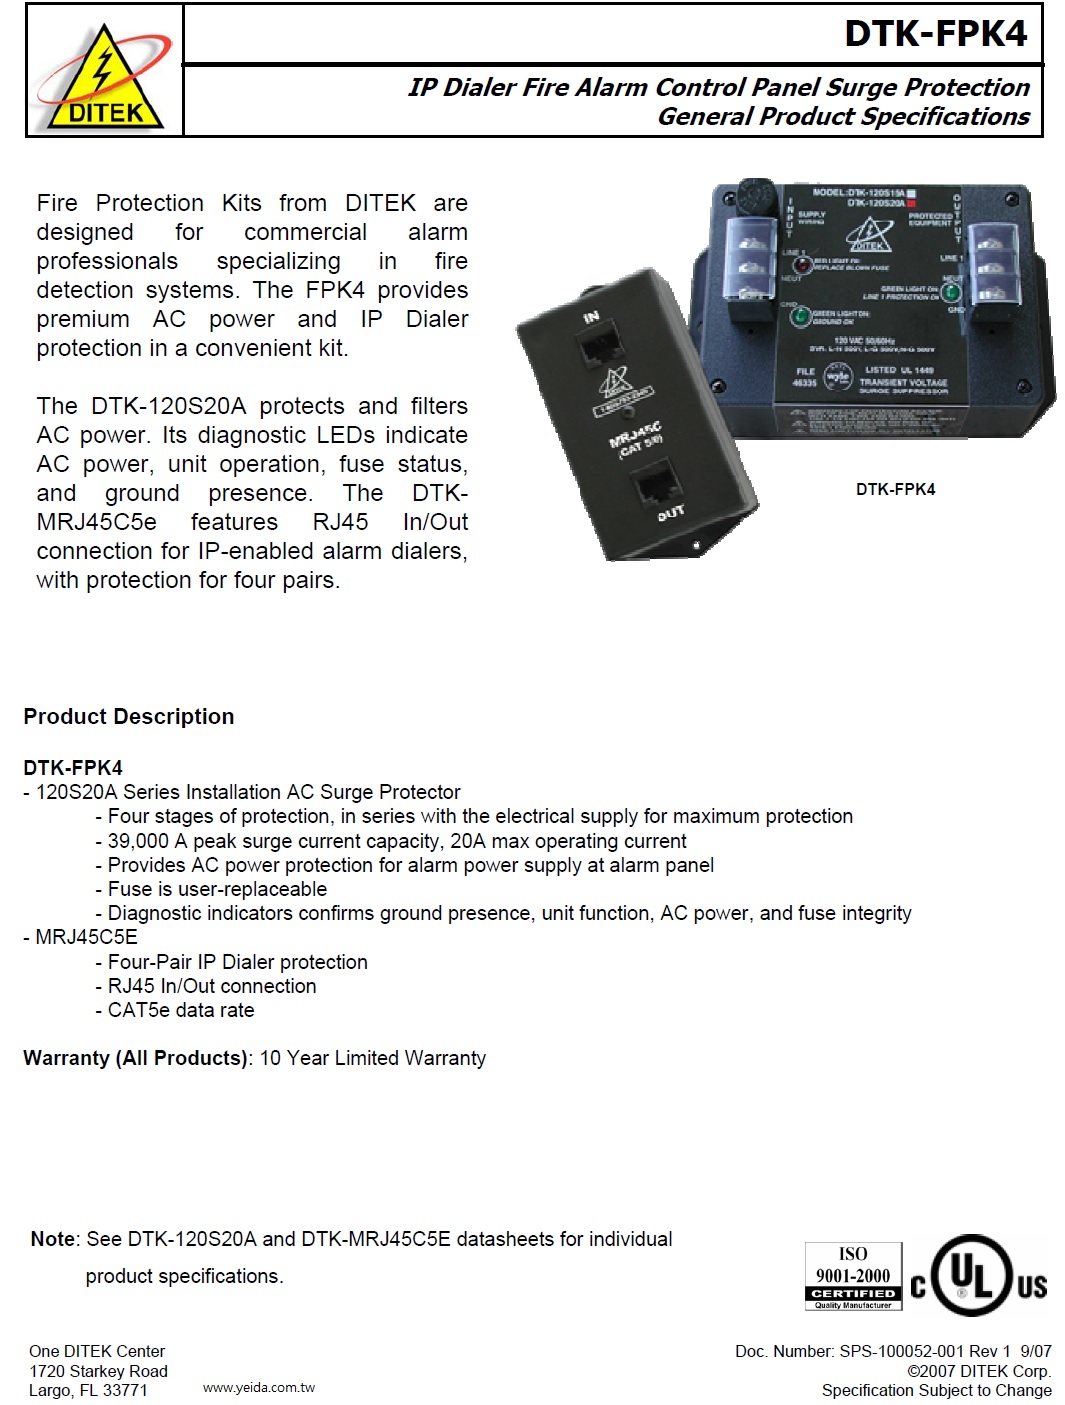 Ditek(DTK-MRJ45C5E, DTK-120S20A)IP Dialer Fire Alarm Control Panel Surge Protection, IP撥號器火災報警控制面板浪湧保護( 雷擊保護器)產品圖